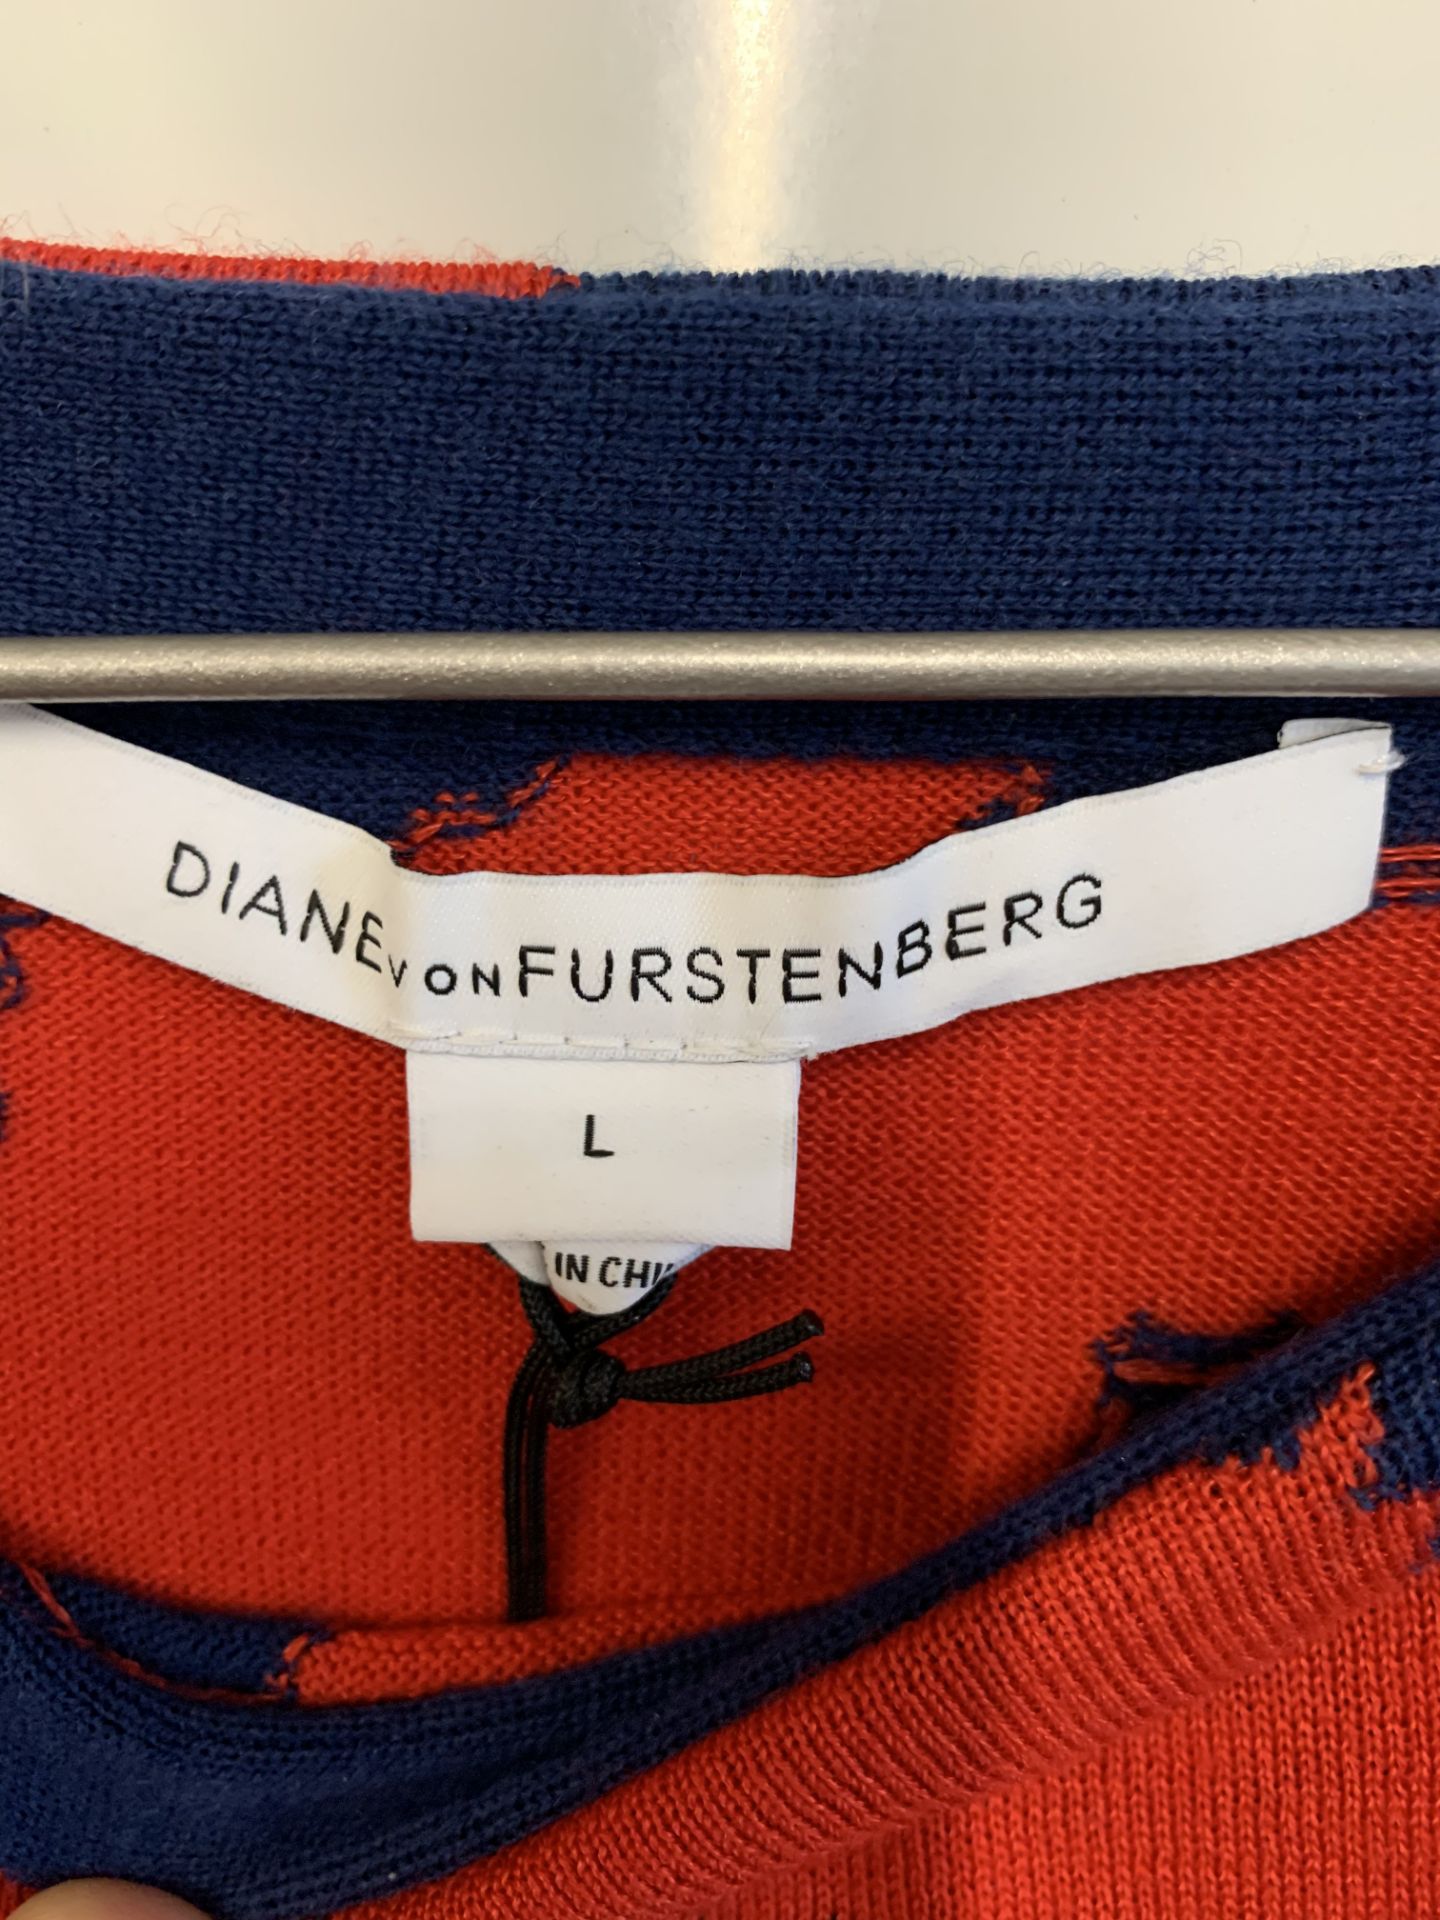 Diane von Furstenberg long sleeved dress - Image 2 of 2